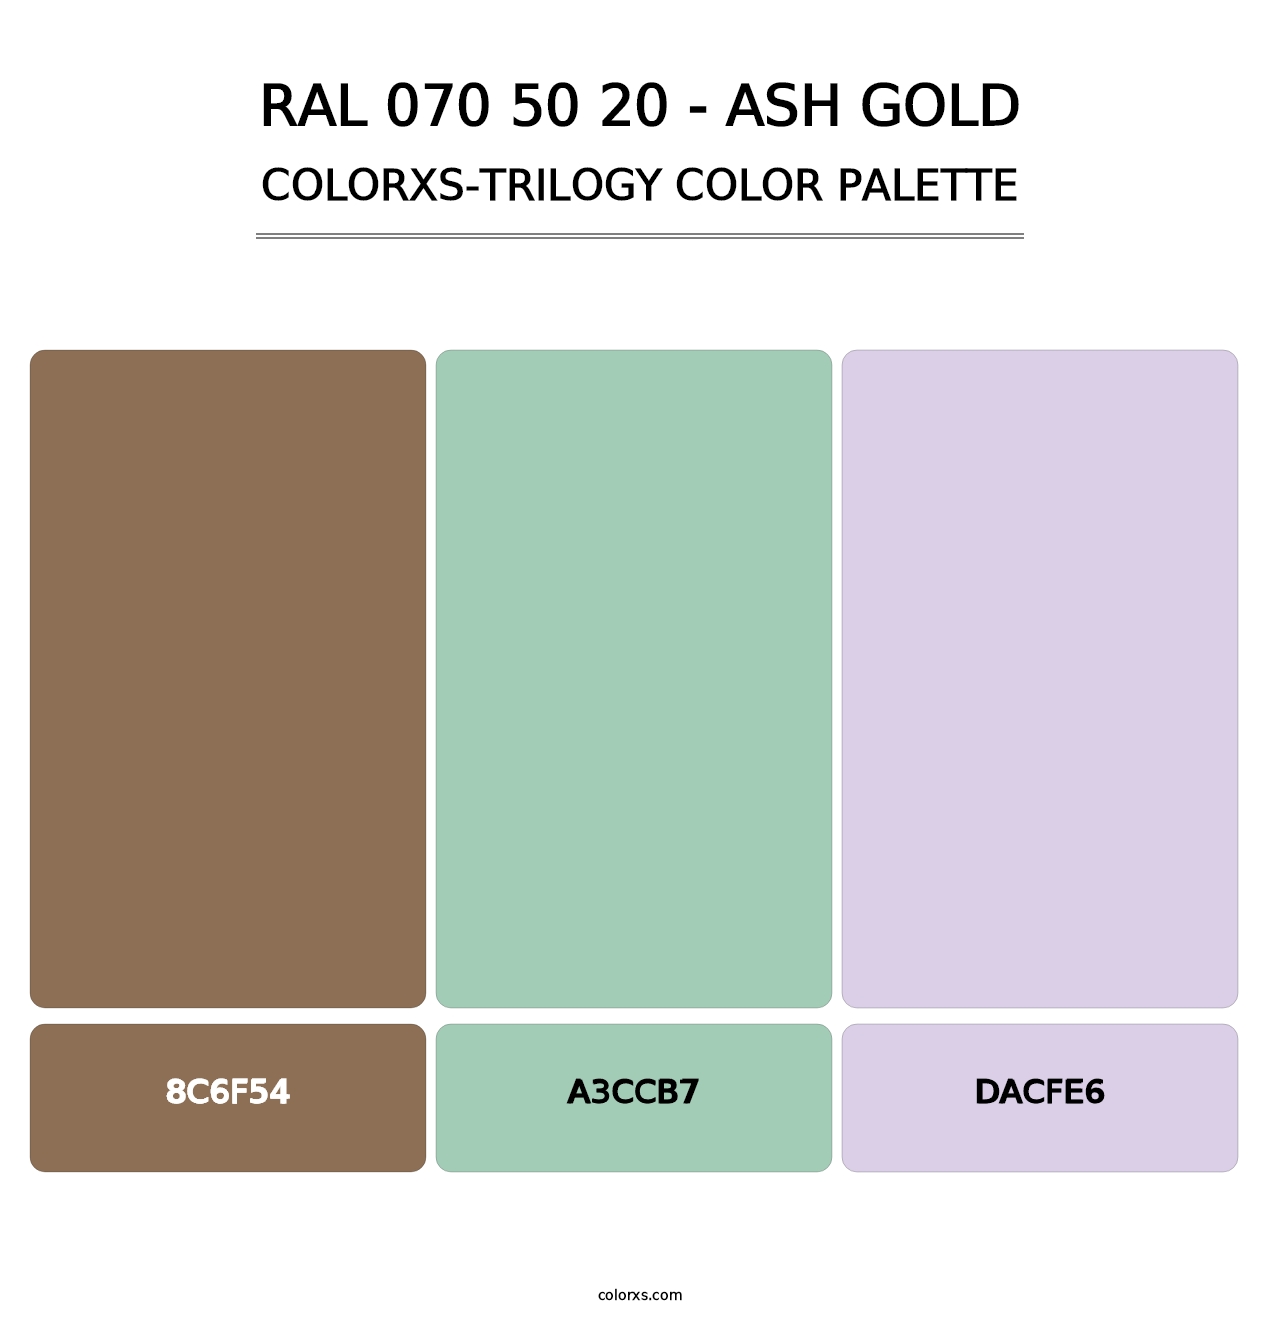 RAL 070 50 20 - Ash Gold - Colorxs Trilogy Palette